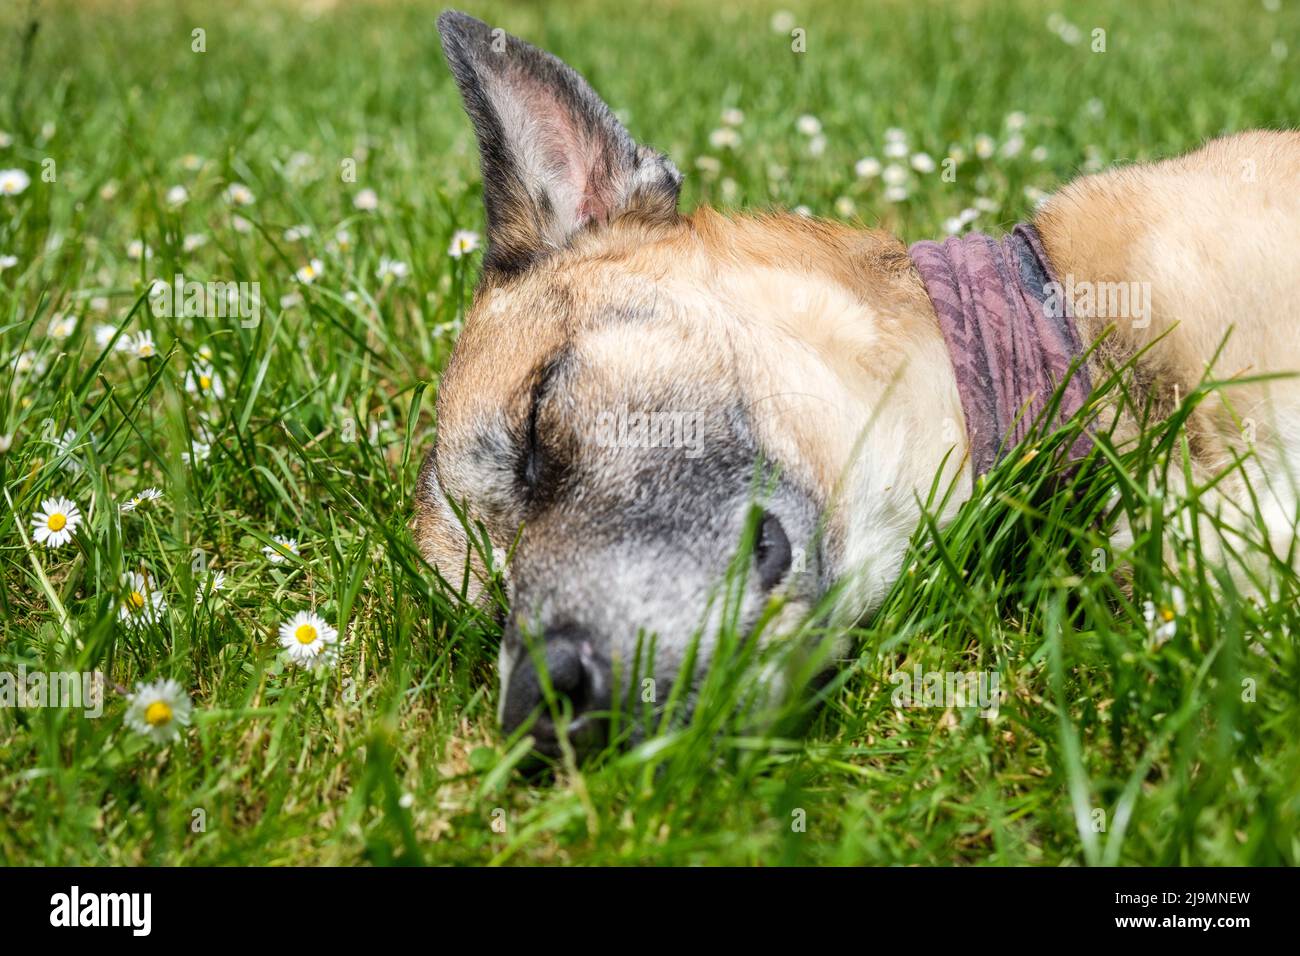 Cane addormentato in erba | Chien batard endormi sur le gazon d'un jardin Foto Stock